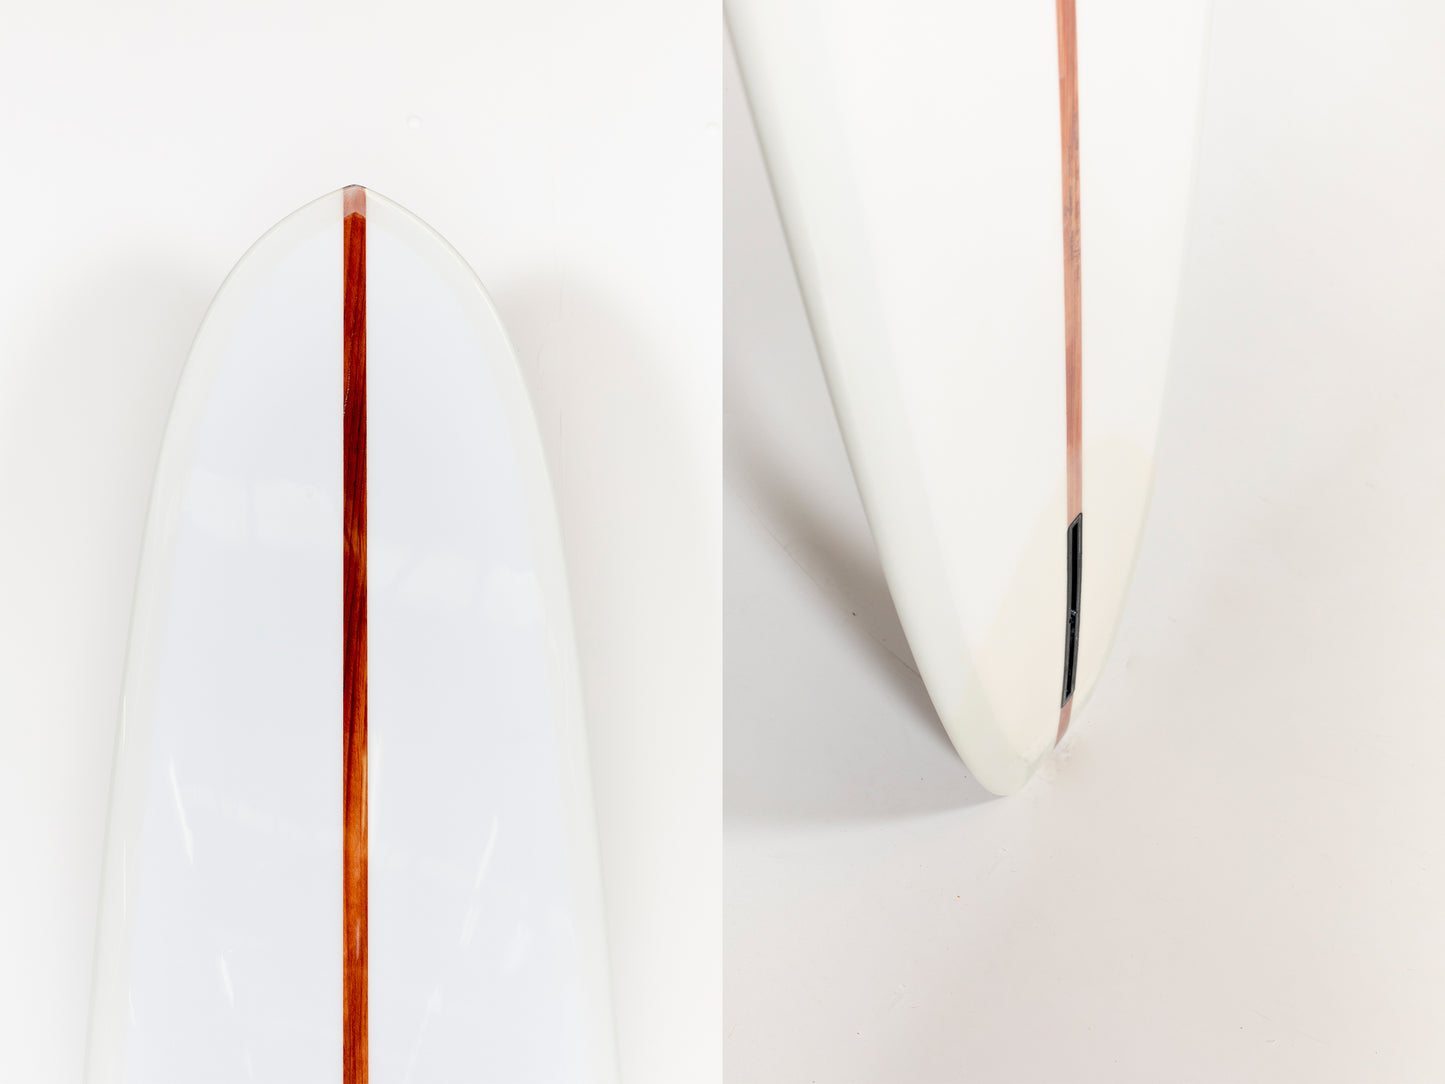 Pukas Surf Shop - Garmendia Surfboards - BULLET - 9’2” x 22 7/8 x 3